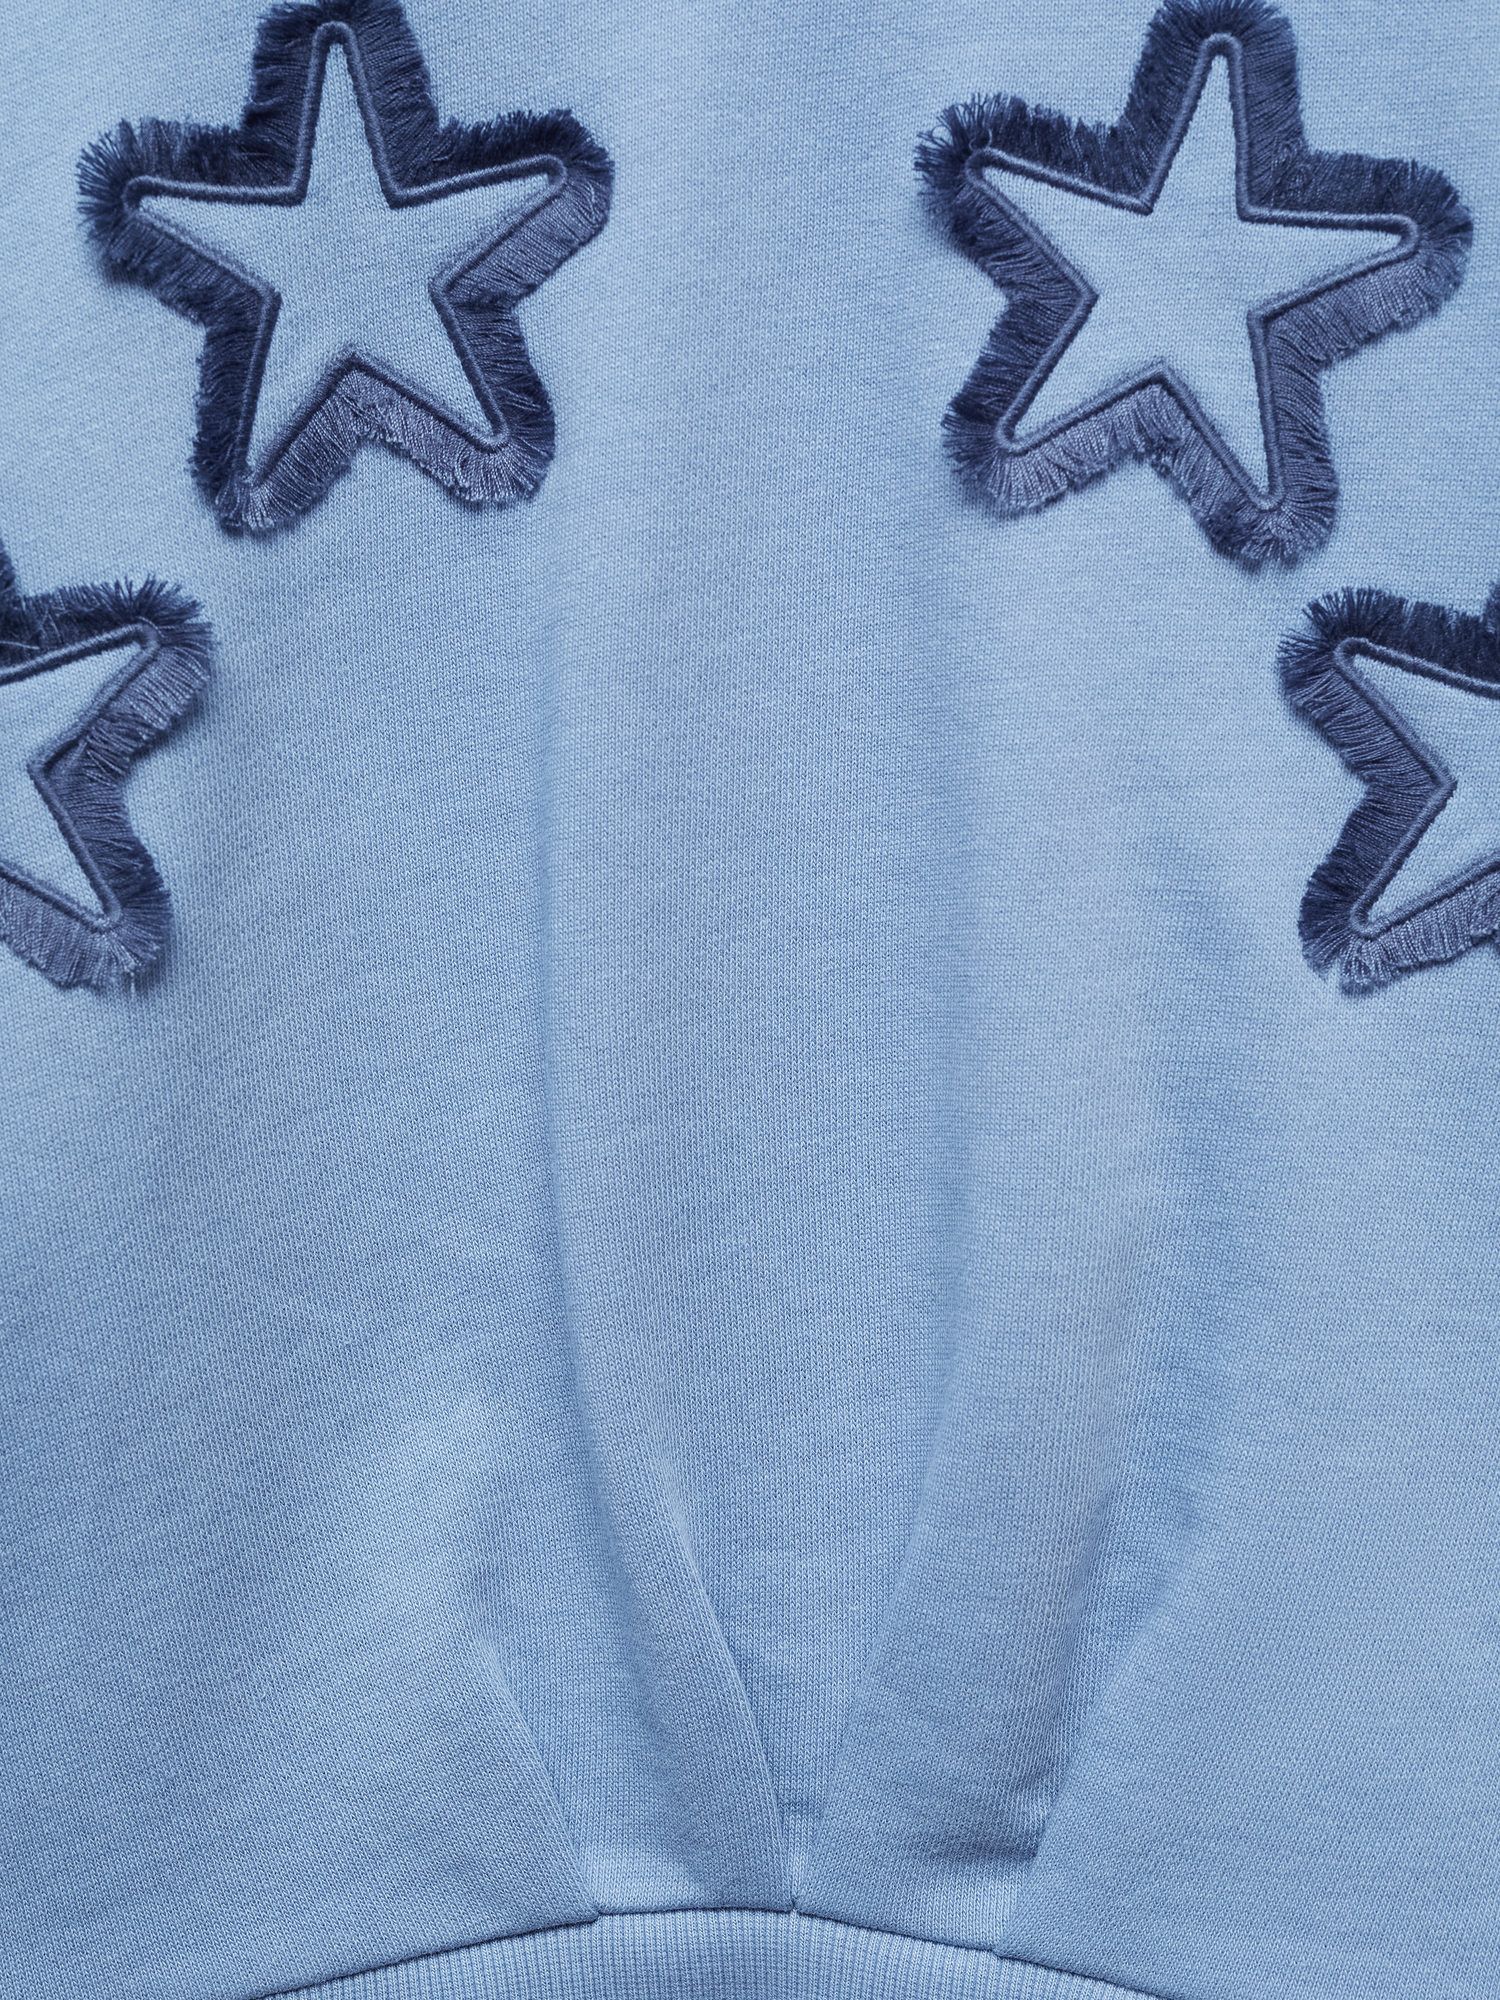 Mango Kids' Estrella Frayed Star Embroidered Sweatshirt, Medium Blue, 11-12 years